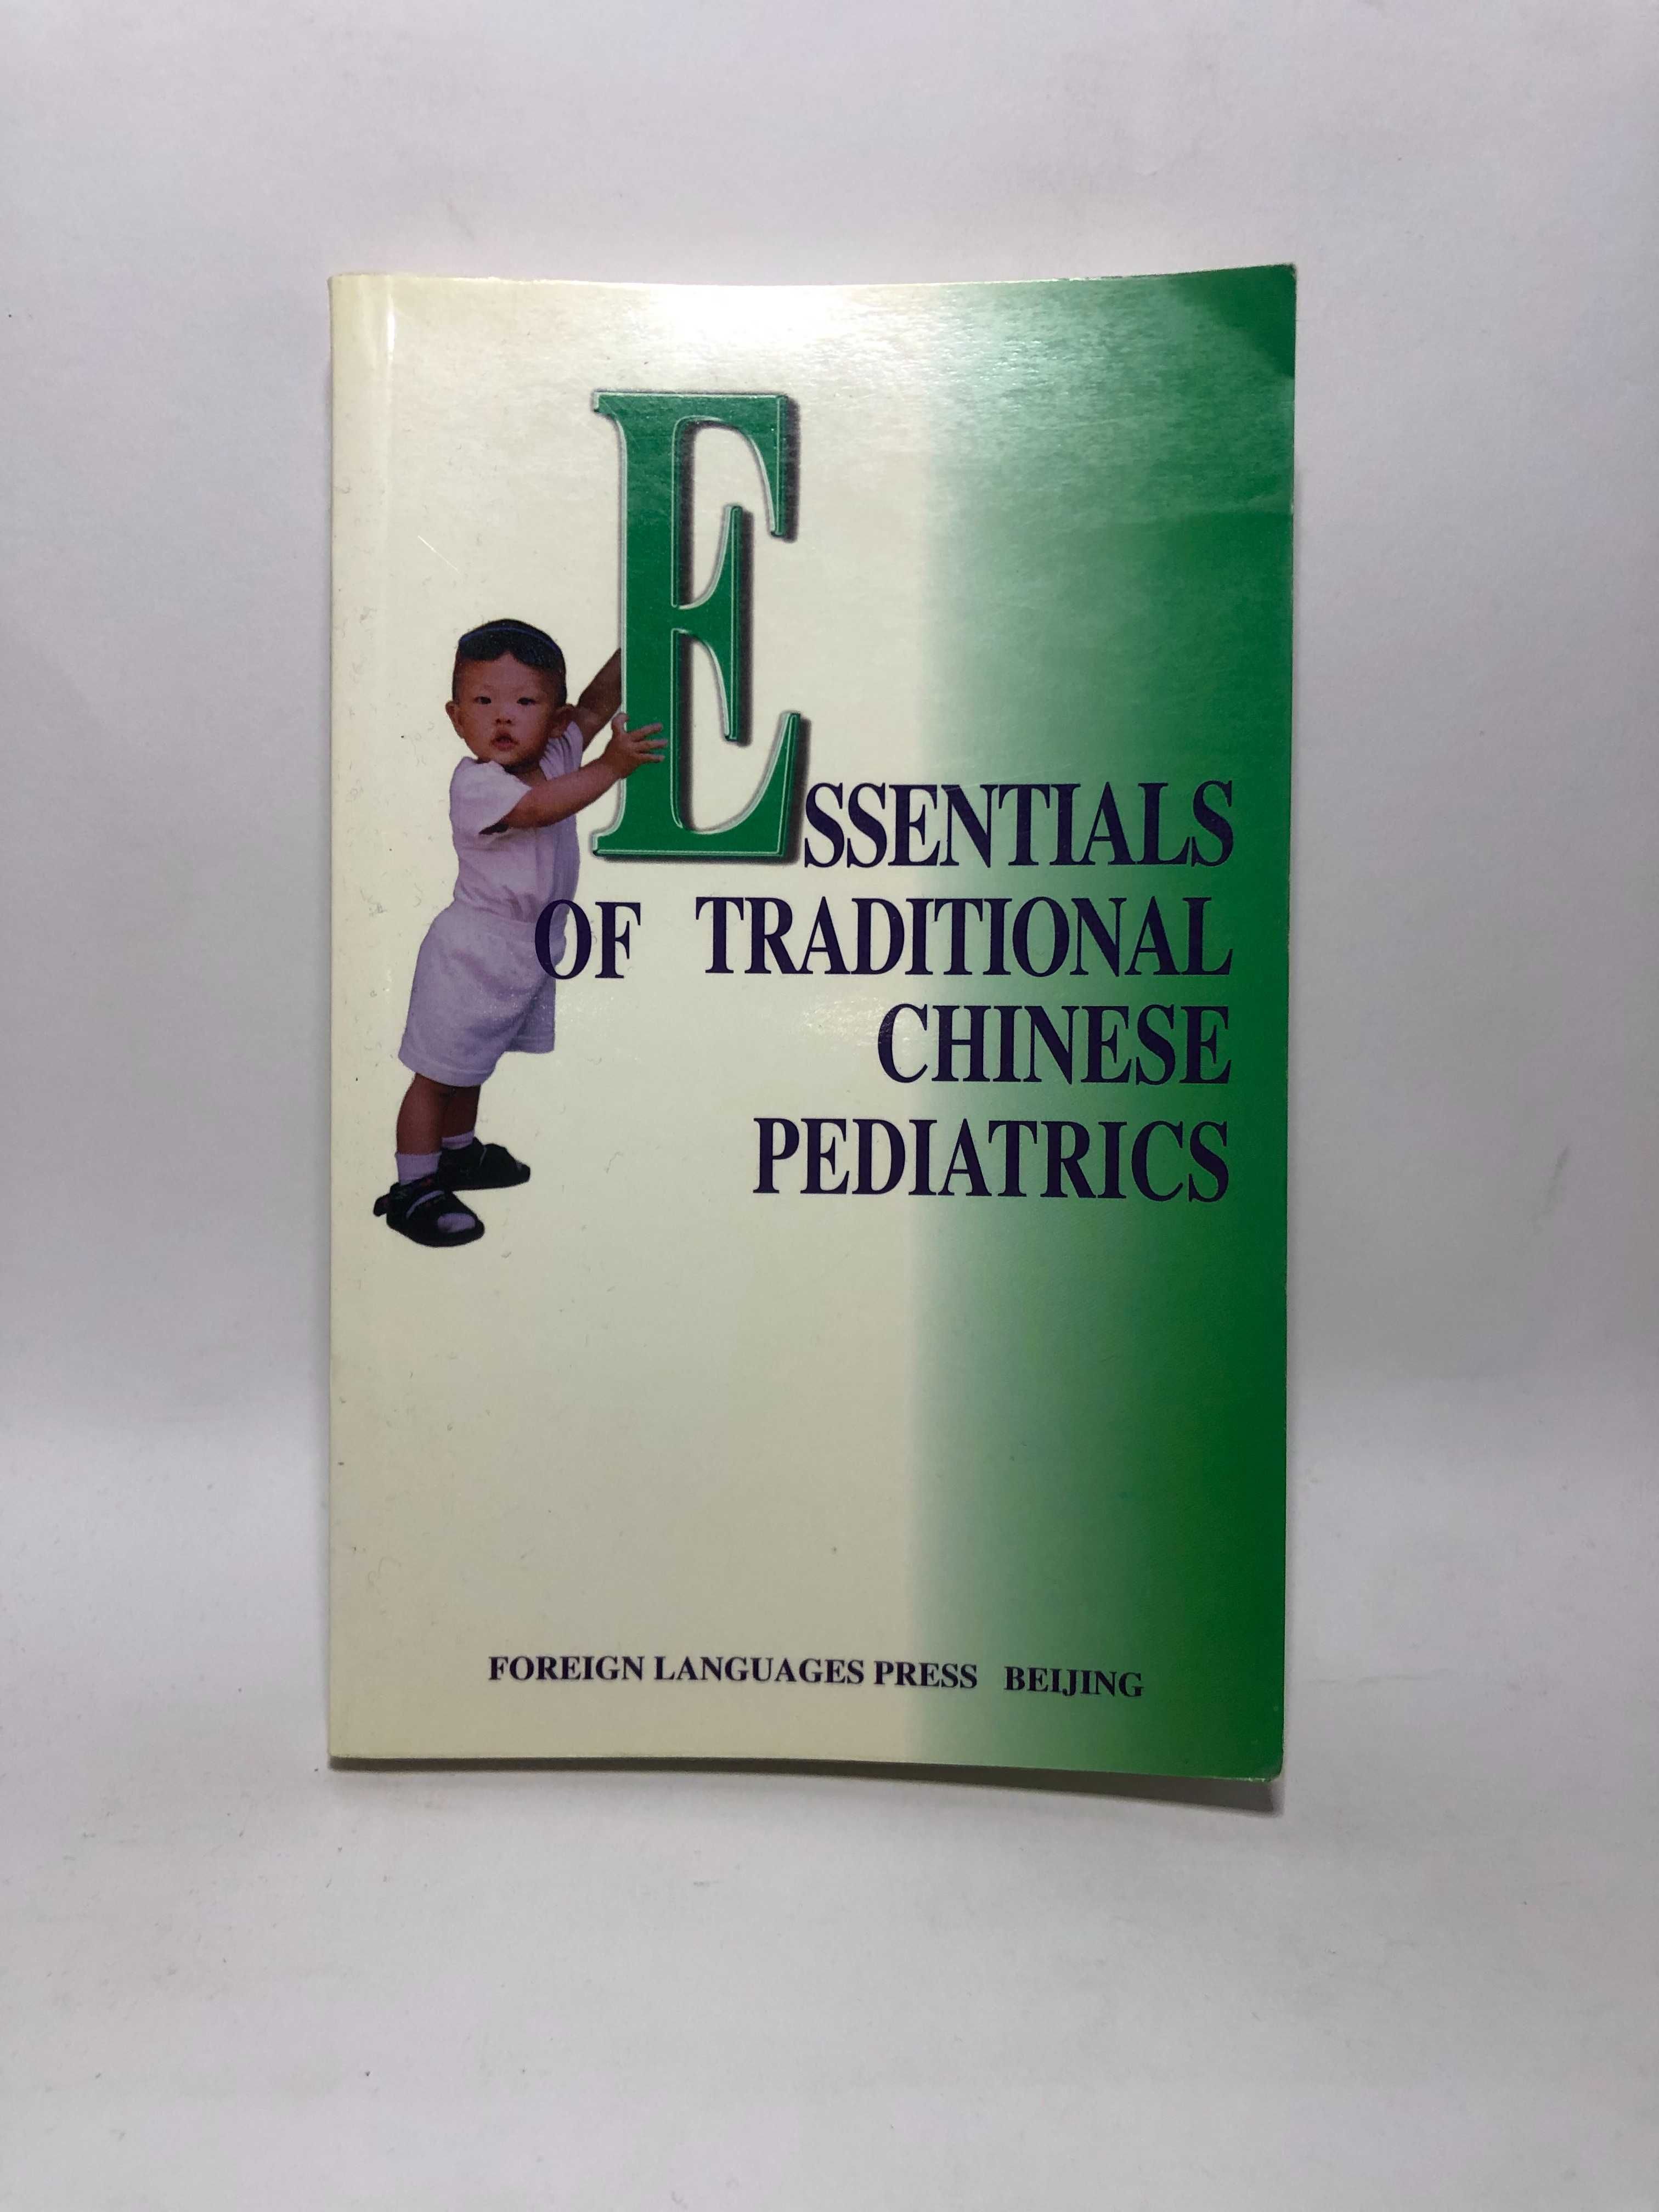 Essentials of Traditional Chinese Pediatrics